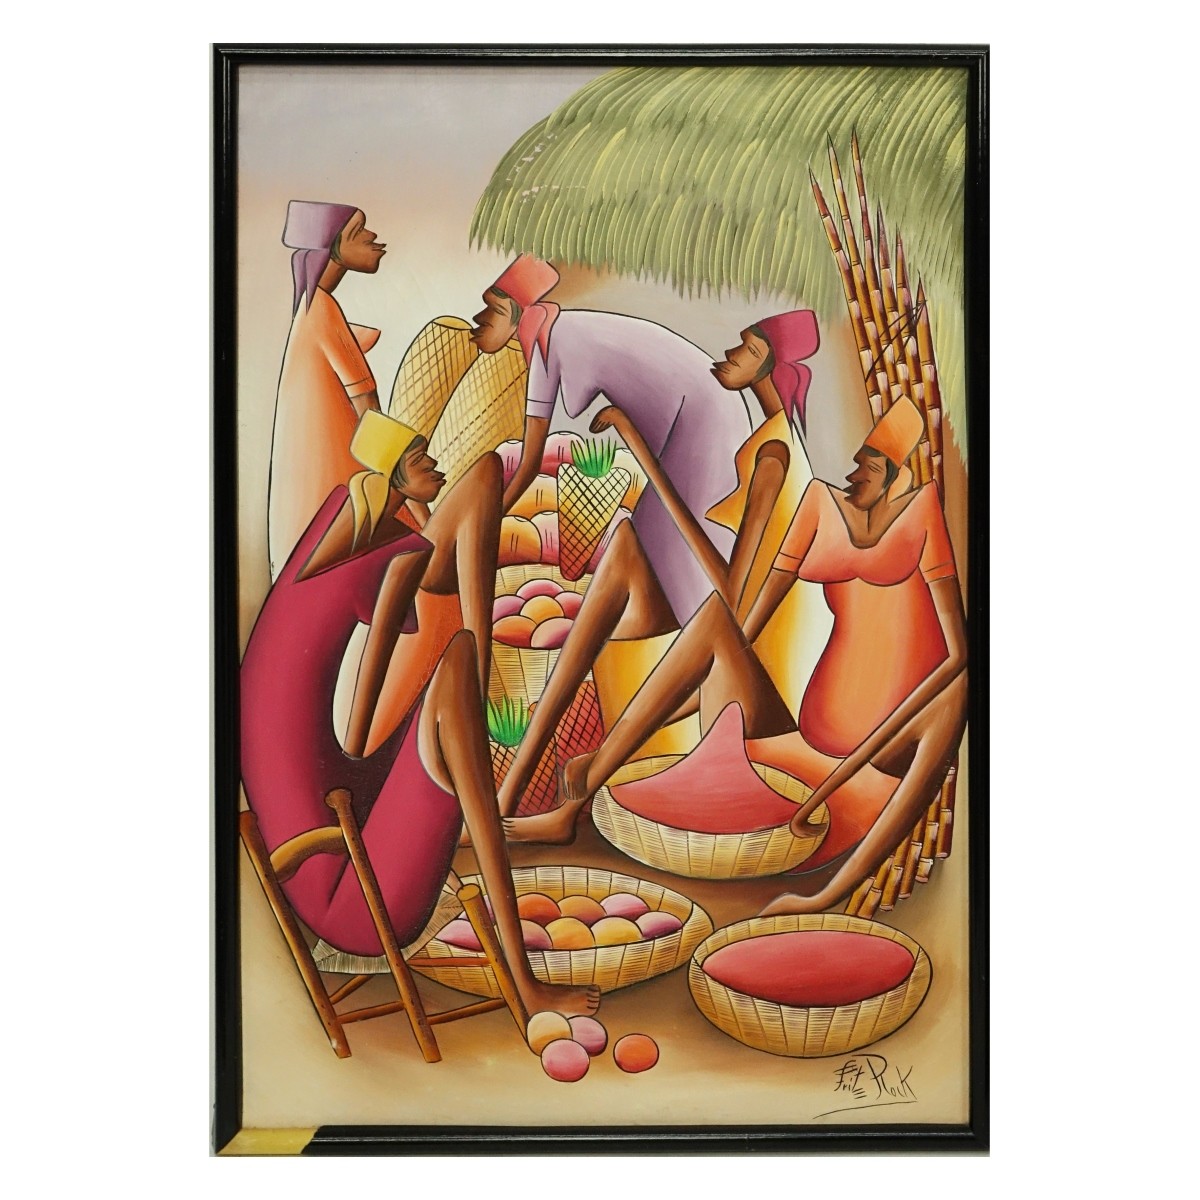 Fritz Rock Haitian Oil on Canvas